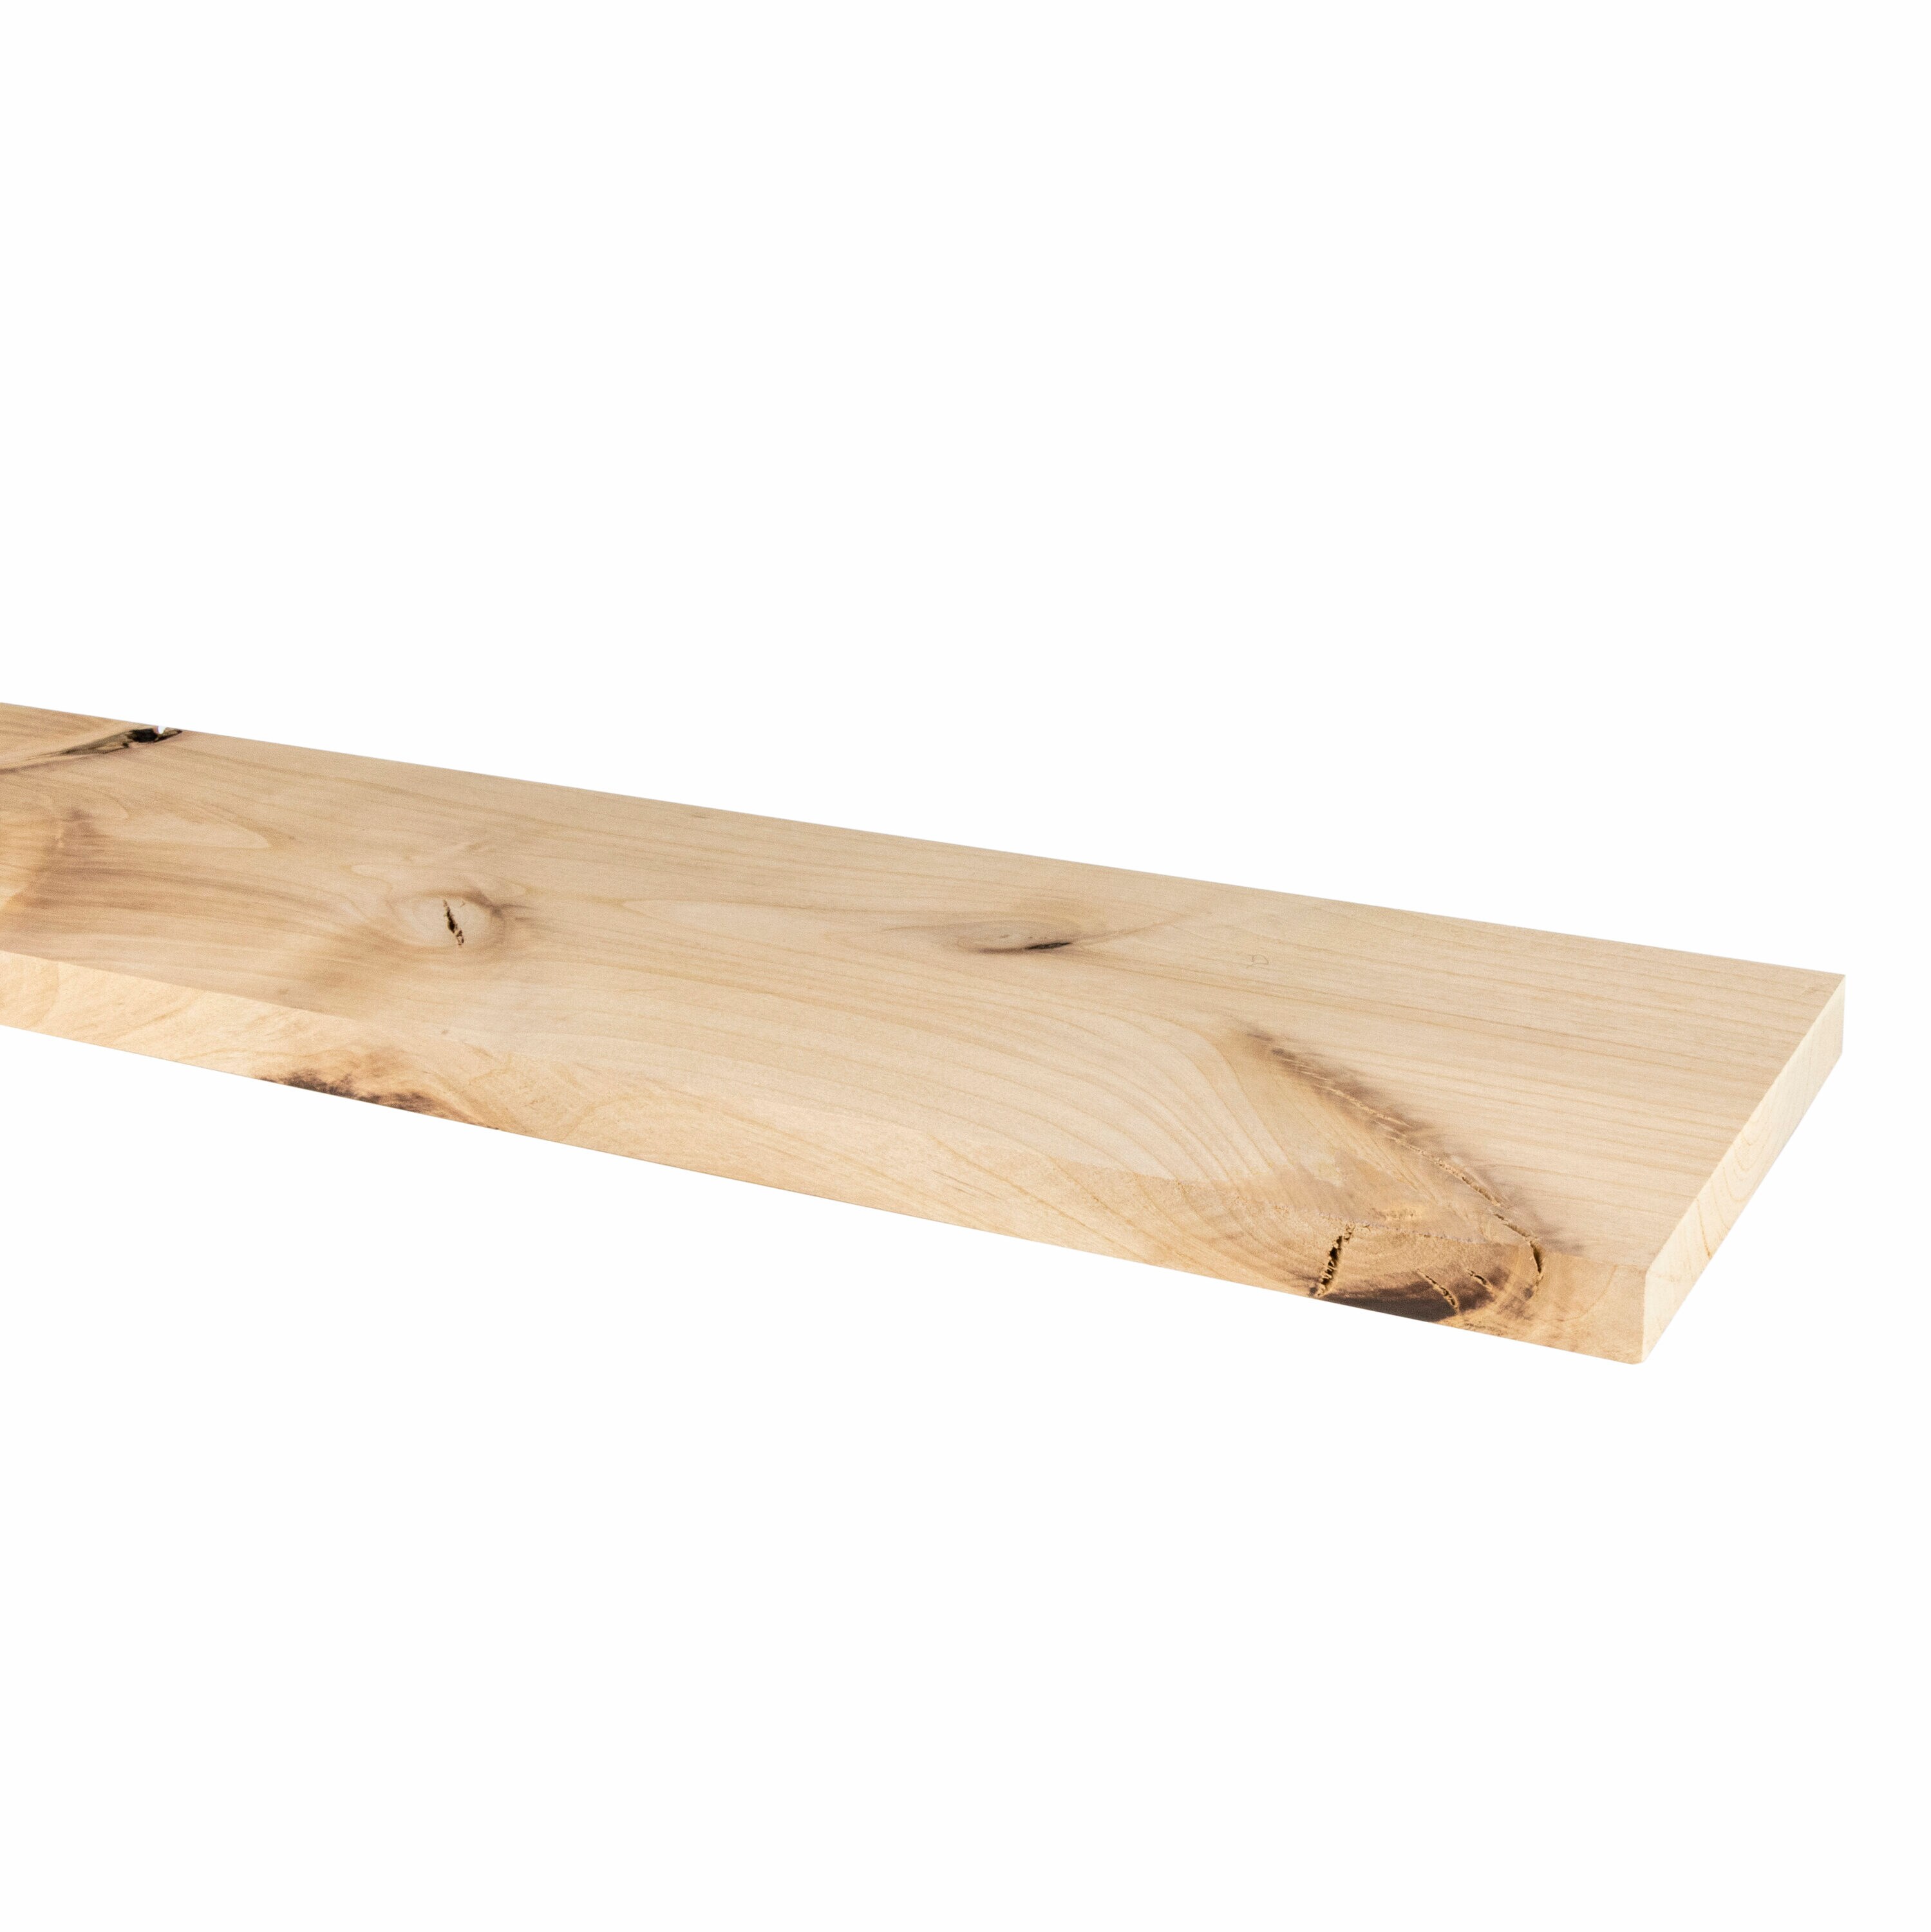  The Hardwood Edge Alder Wood Planks - 4-Pack Alder Wood for  Unfinished Wood Crafts - 1/8'' (3mm) 100% Pure Hardwood - Laser Engraving  Blanks - Alder Craft Wood for Crafts and Gifts